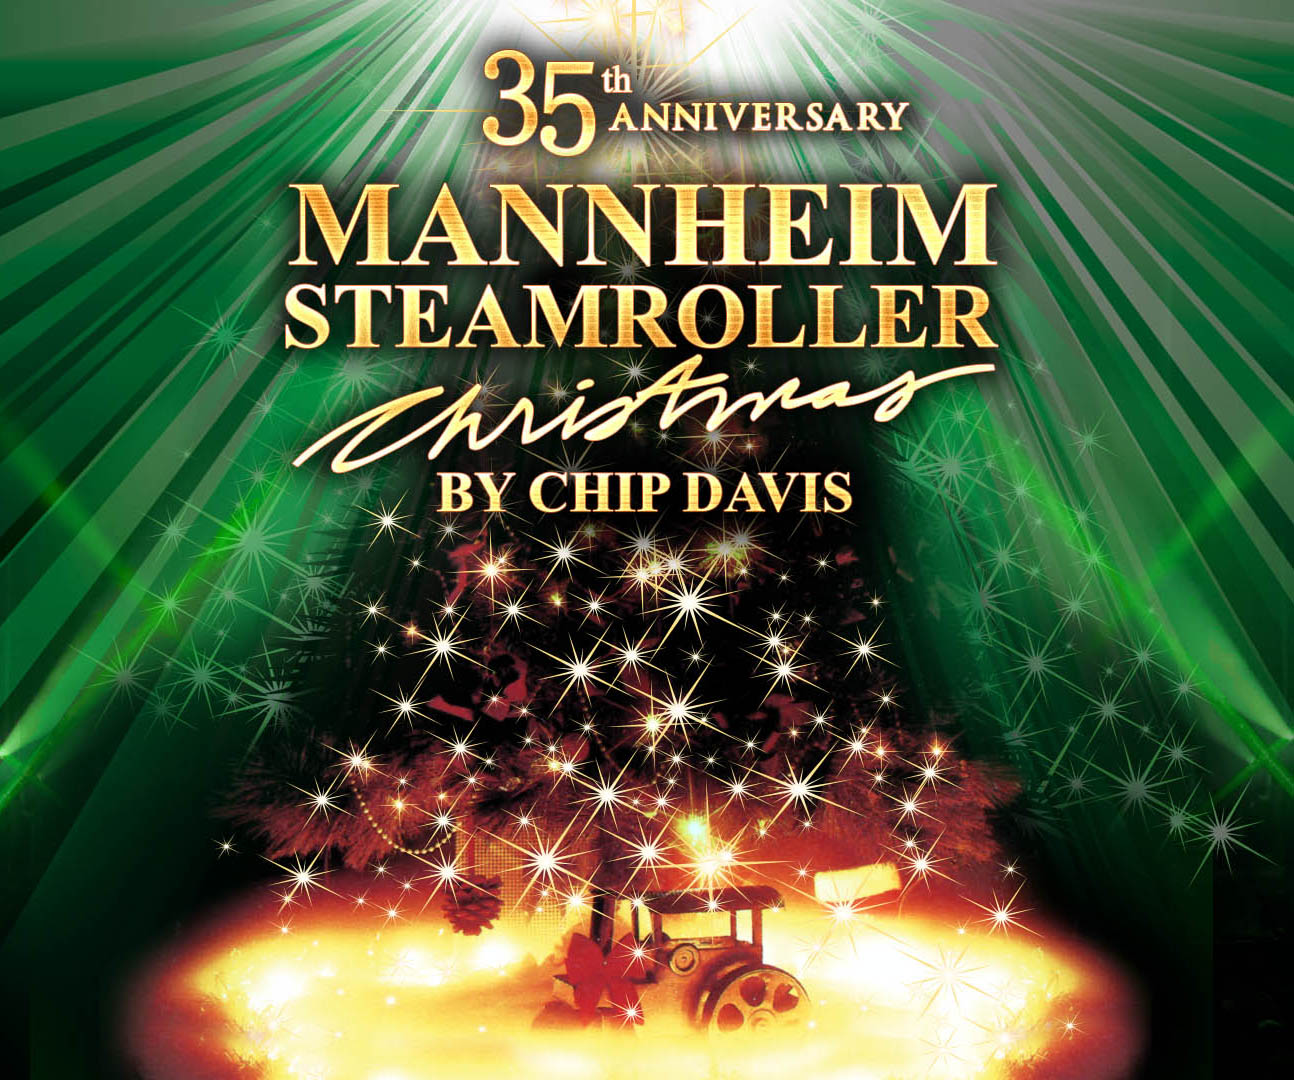 Mannheim steamroller universal dates